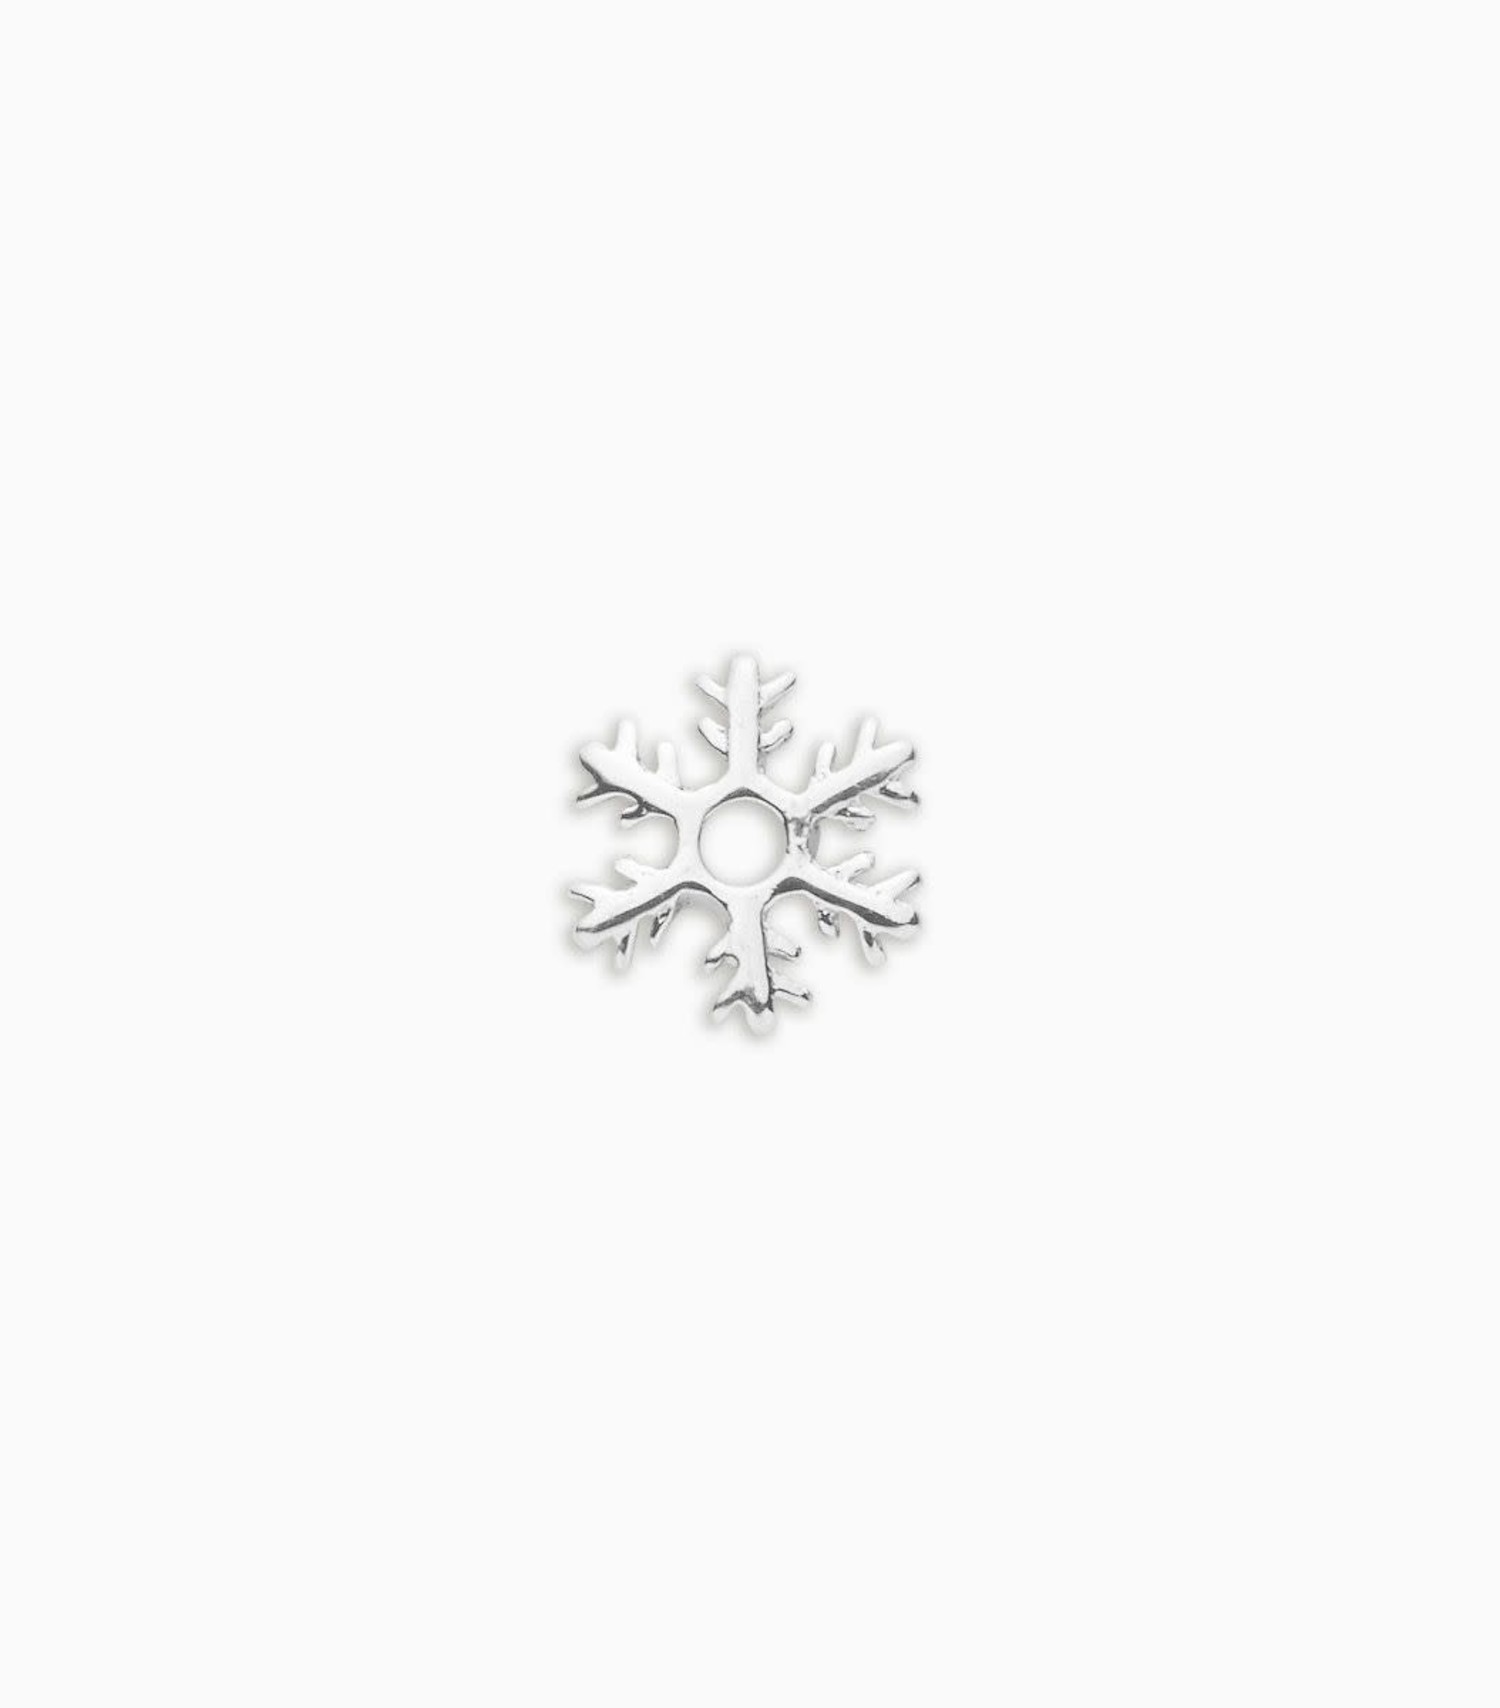 Snowflake - Always Unique - Element 79 Contemporary Jewelry